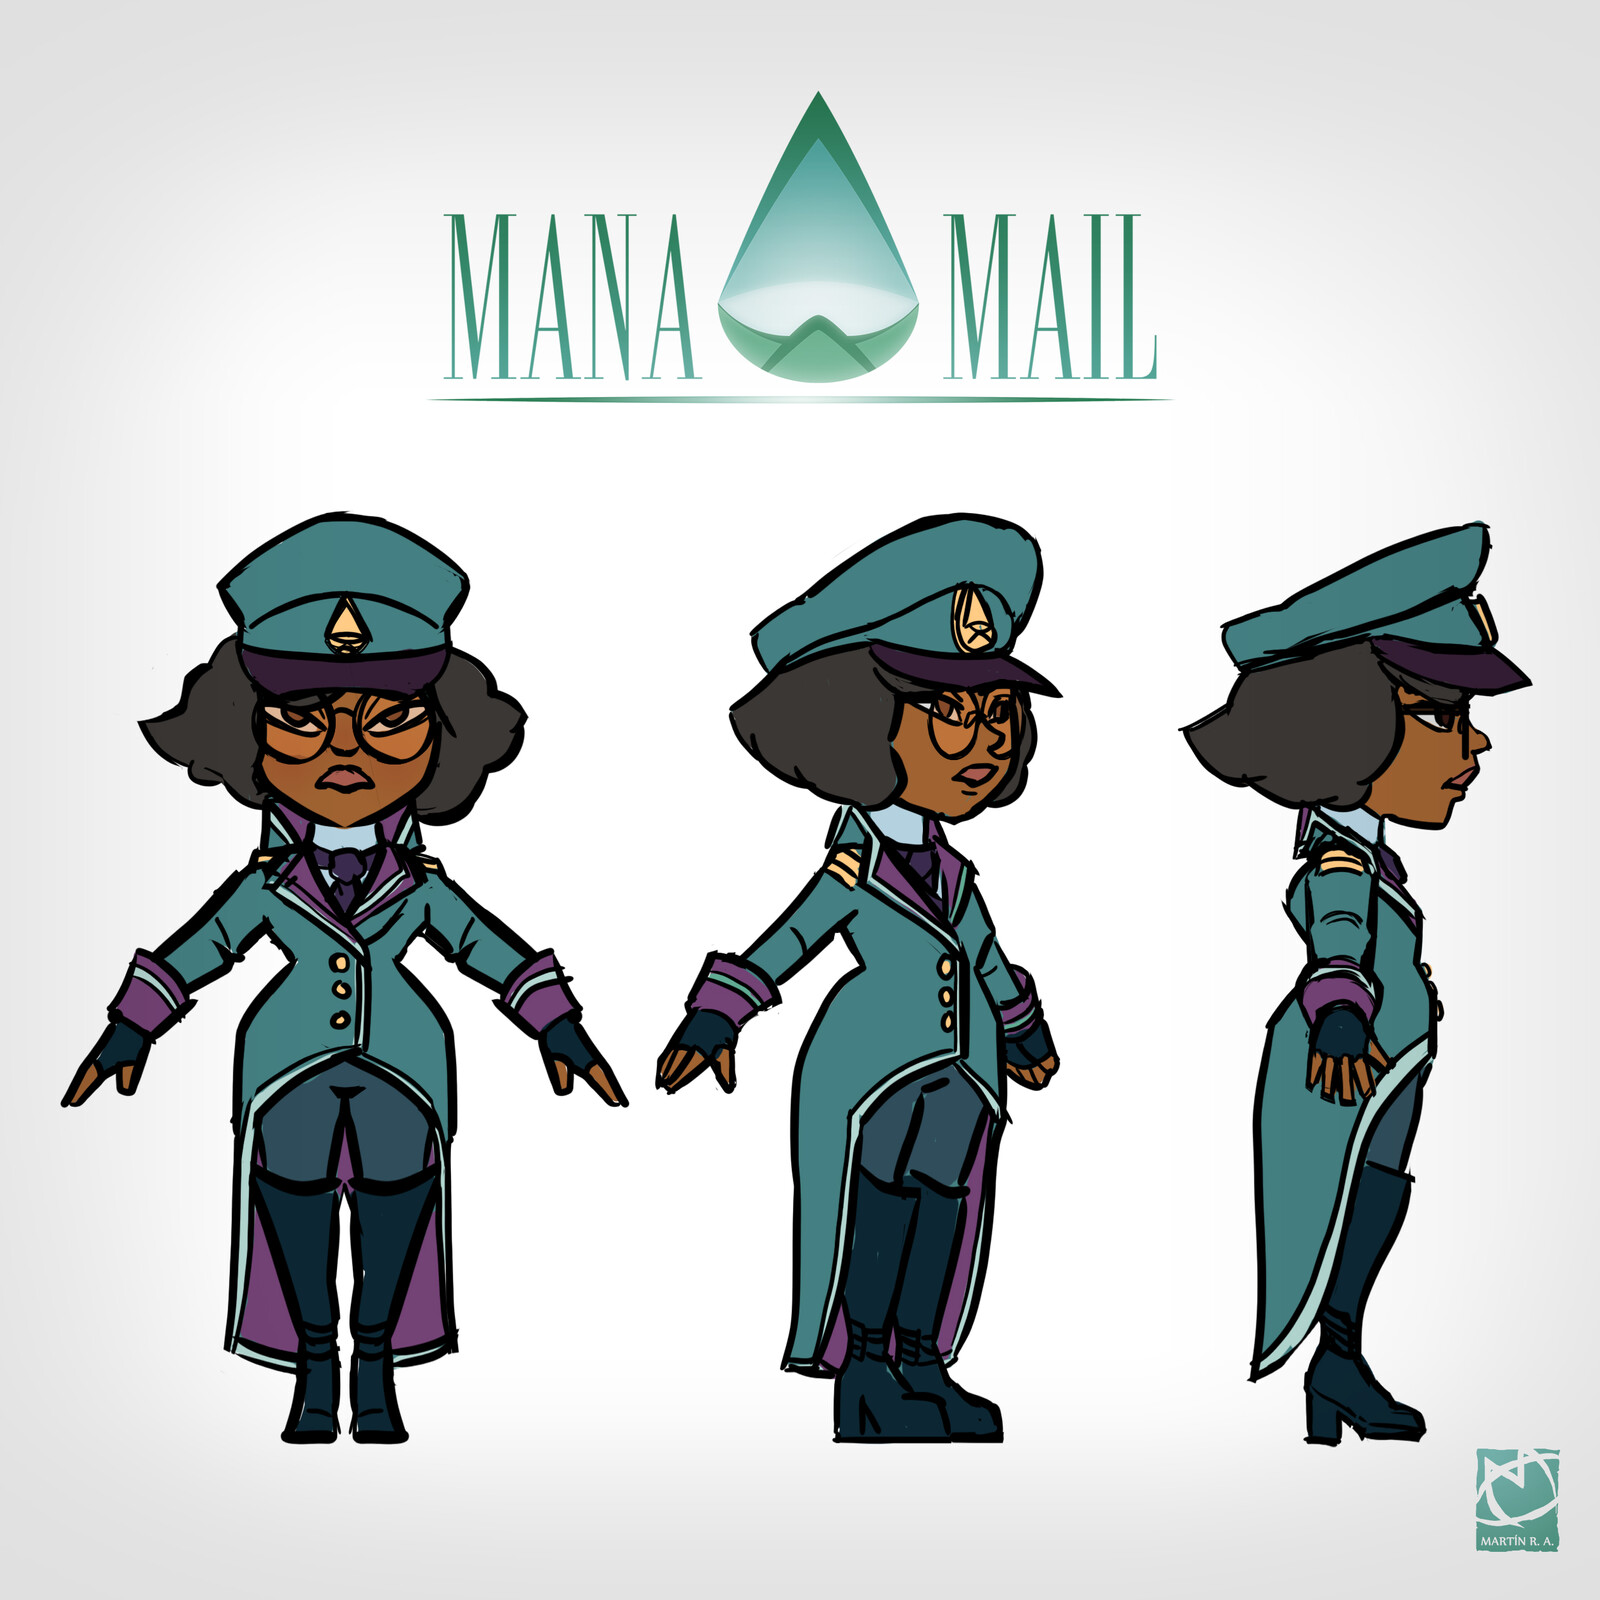 Mana Mail logo and girl character